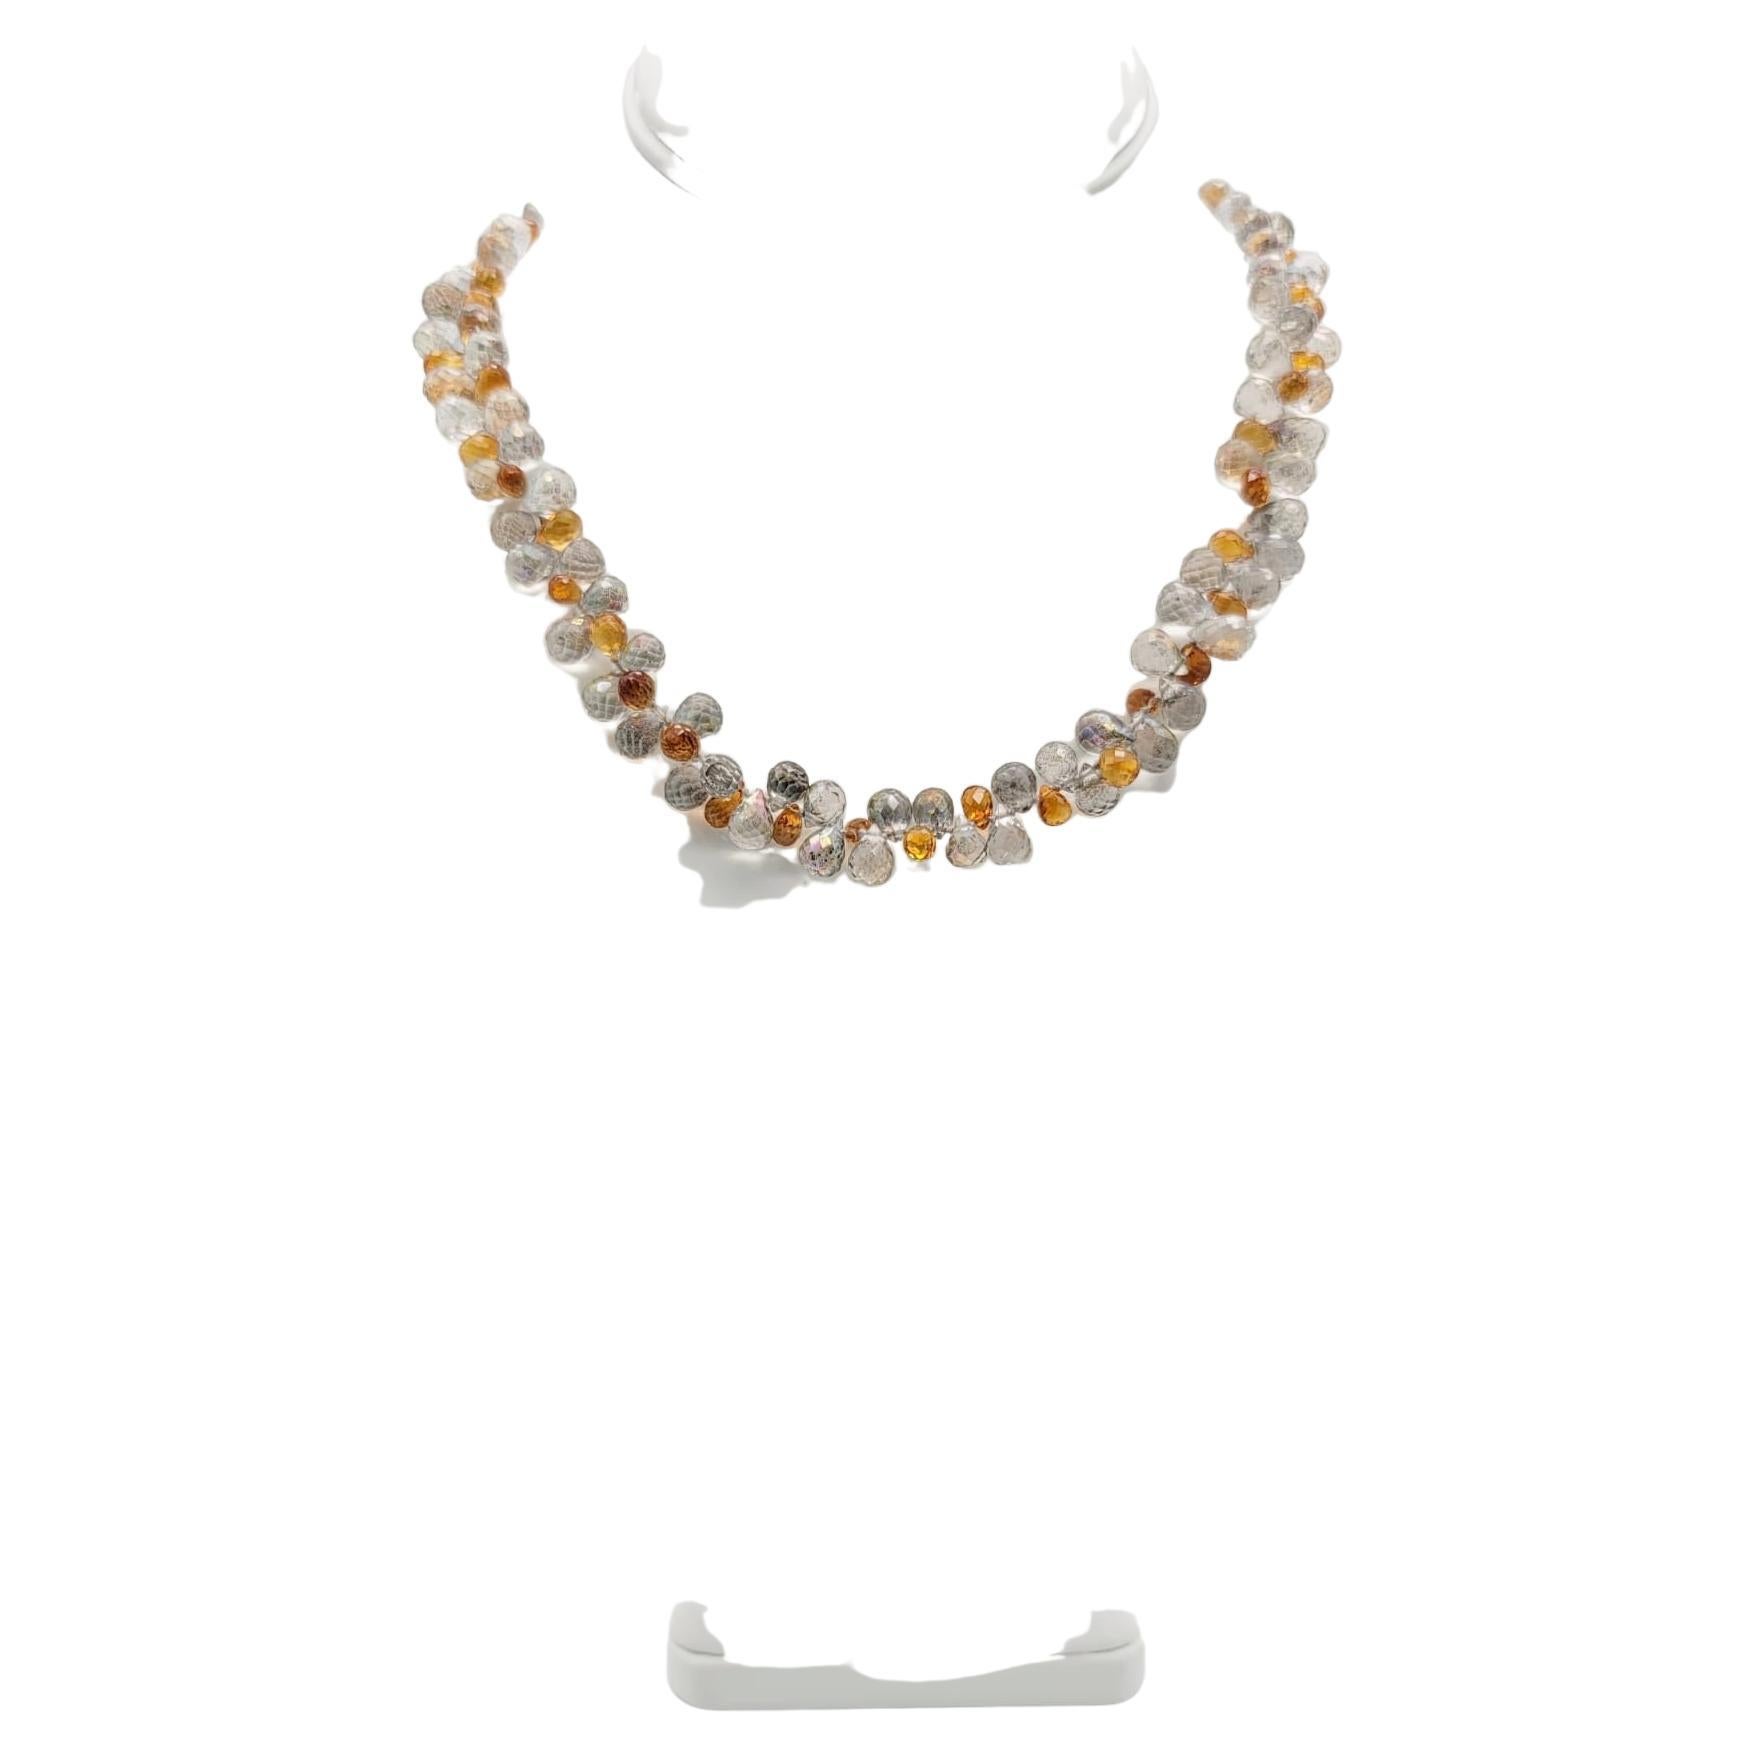 A.Jeschel  Stunning Topaz and Crystal Quartz teardrop necklace For Sale 6